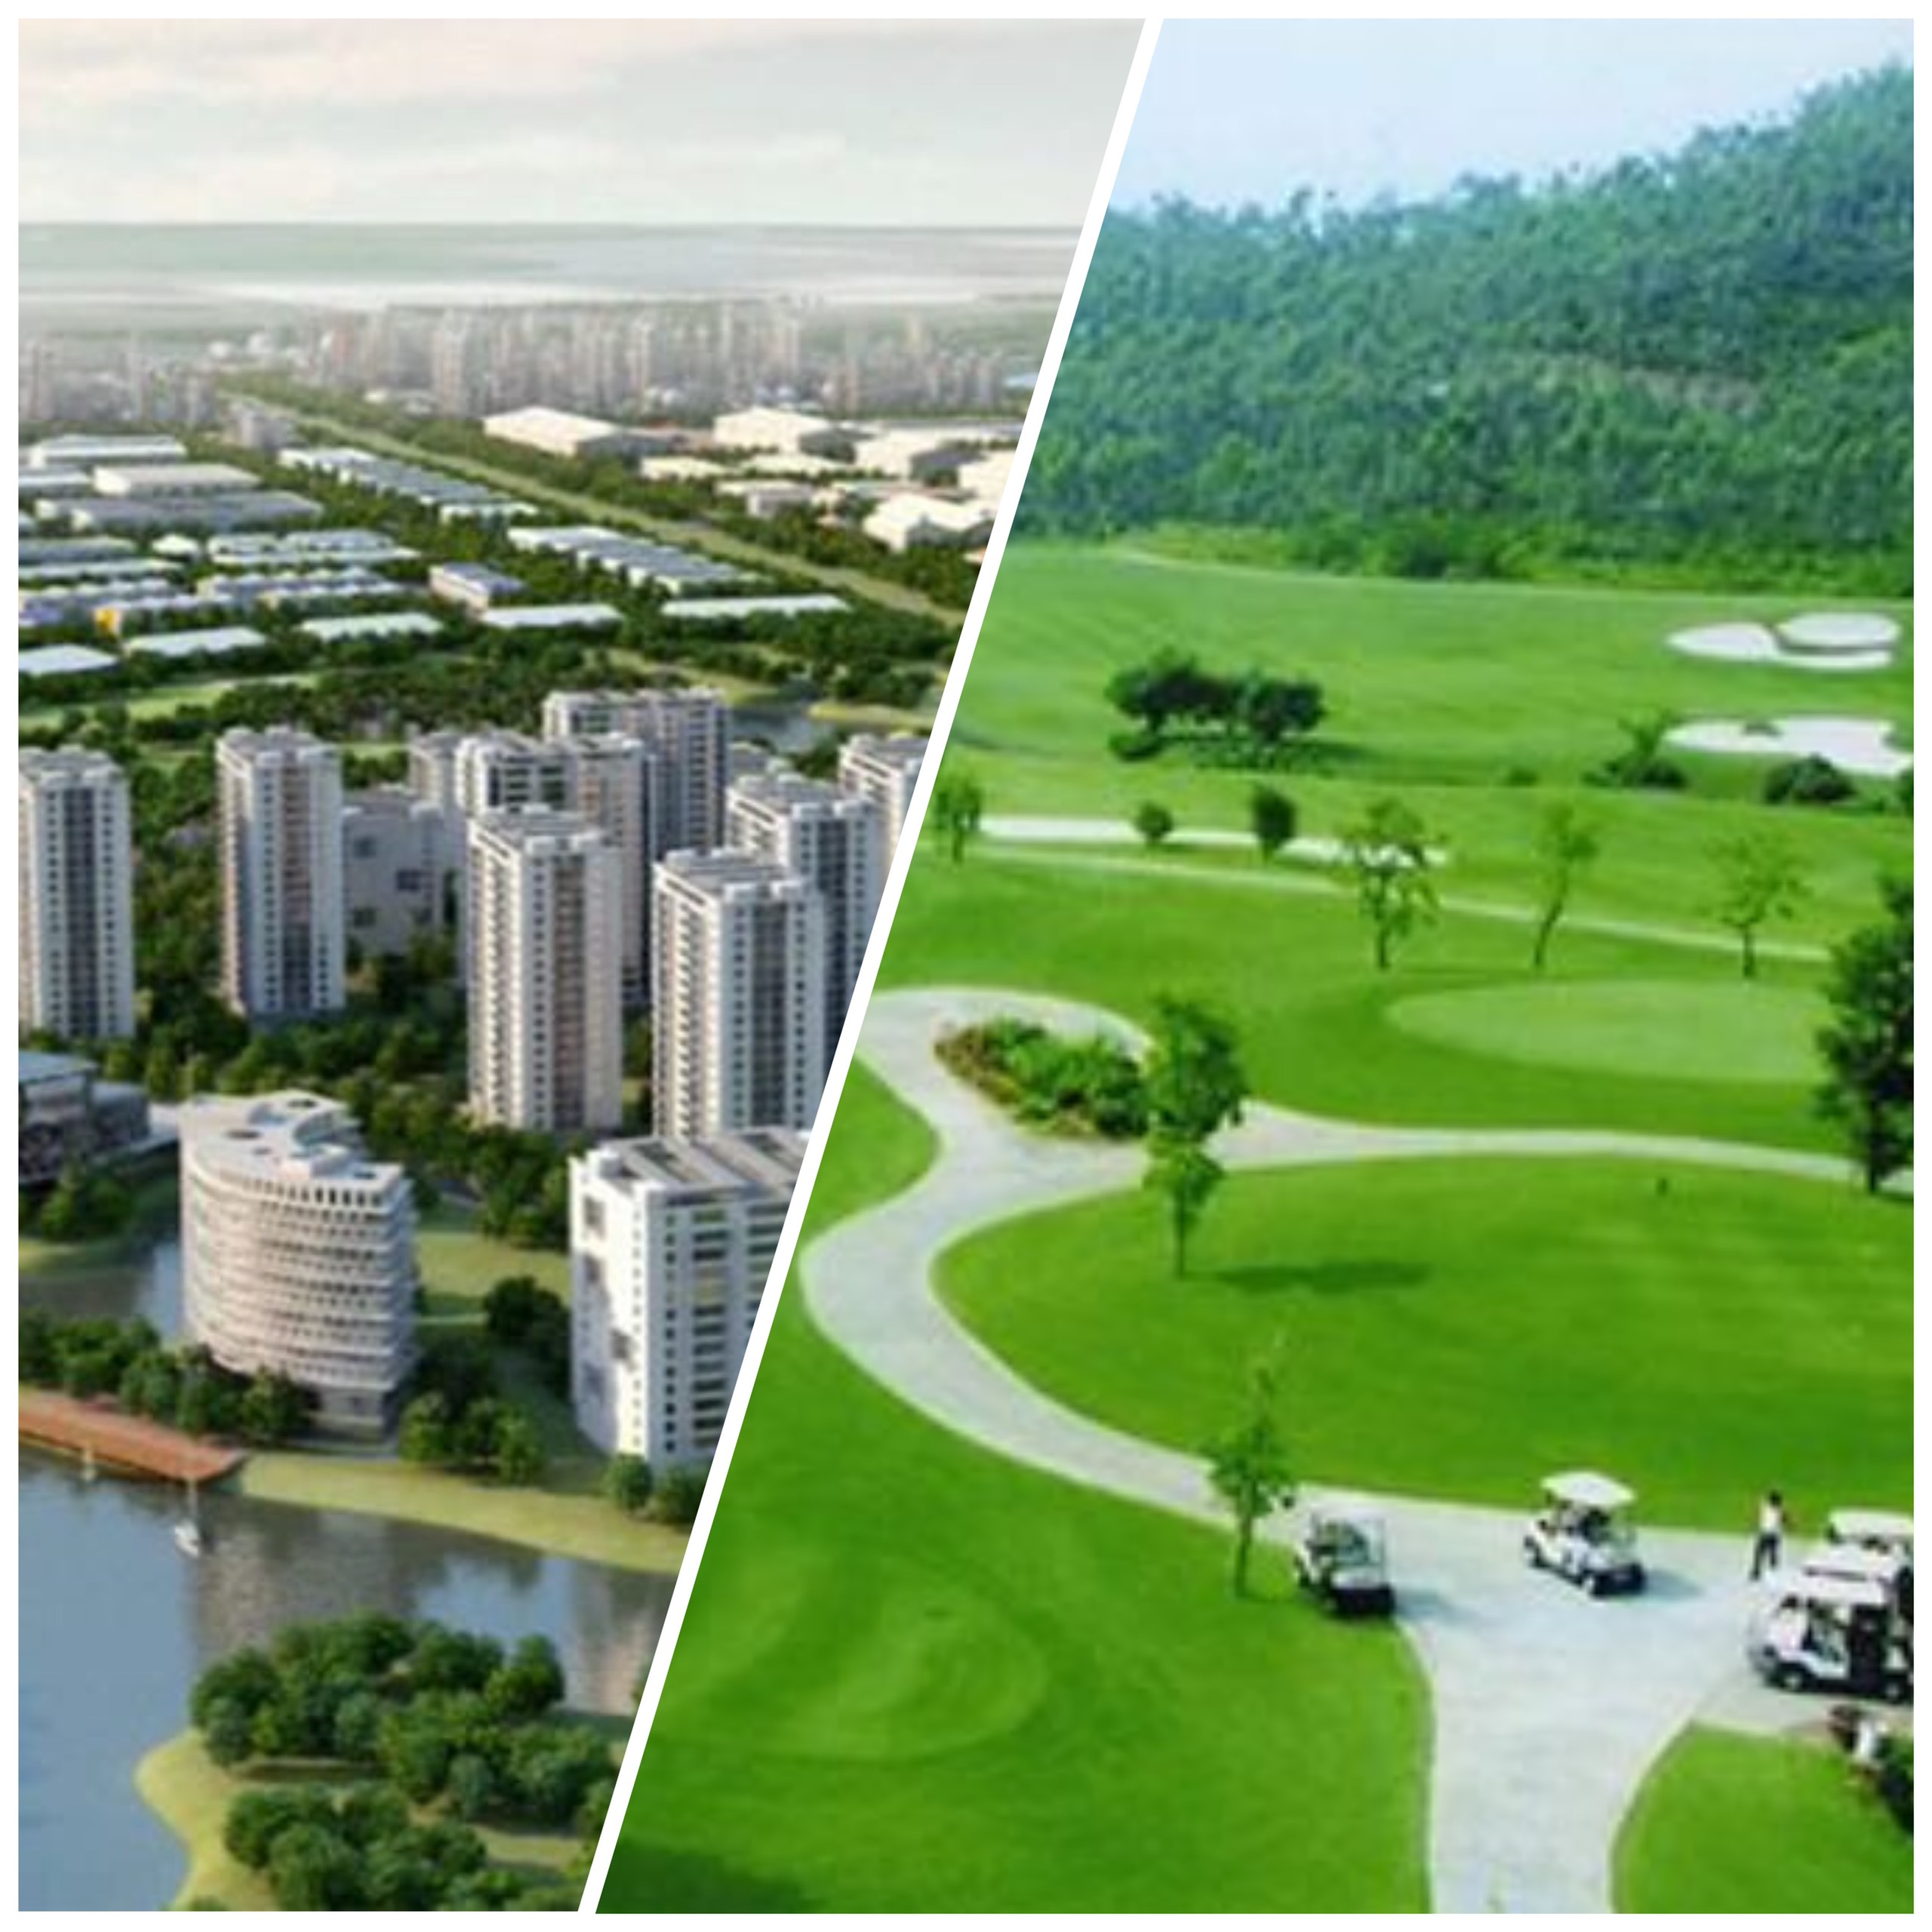 Residential, Villa Complex/ Golf course